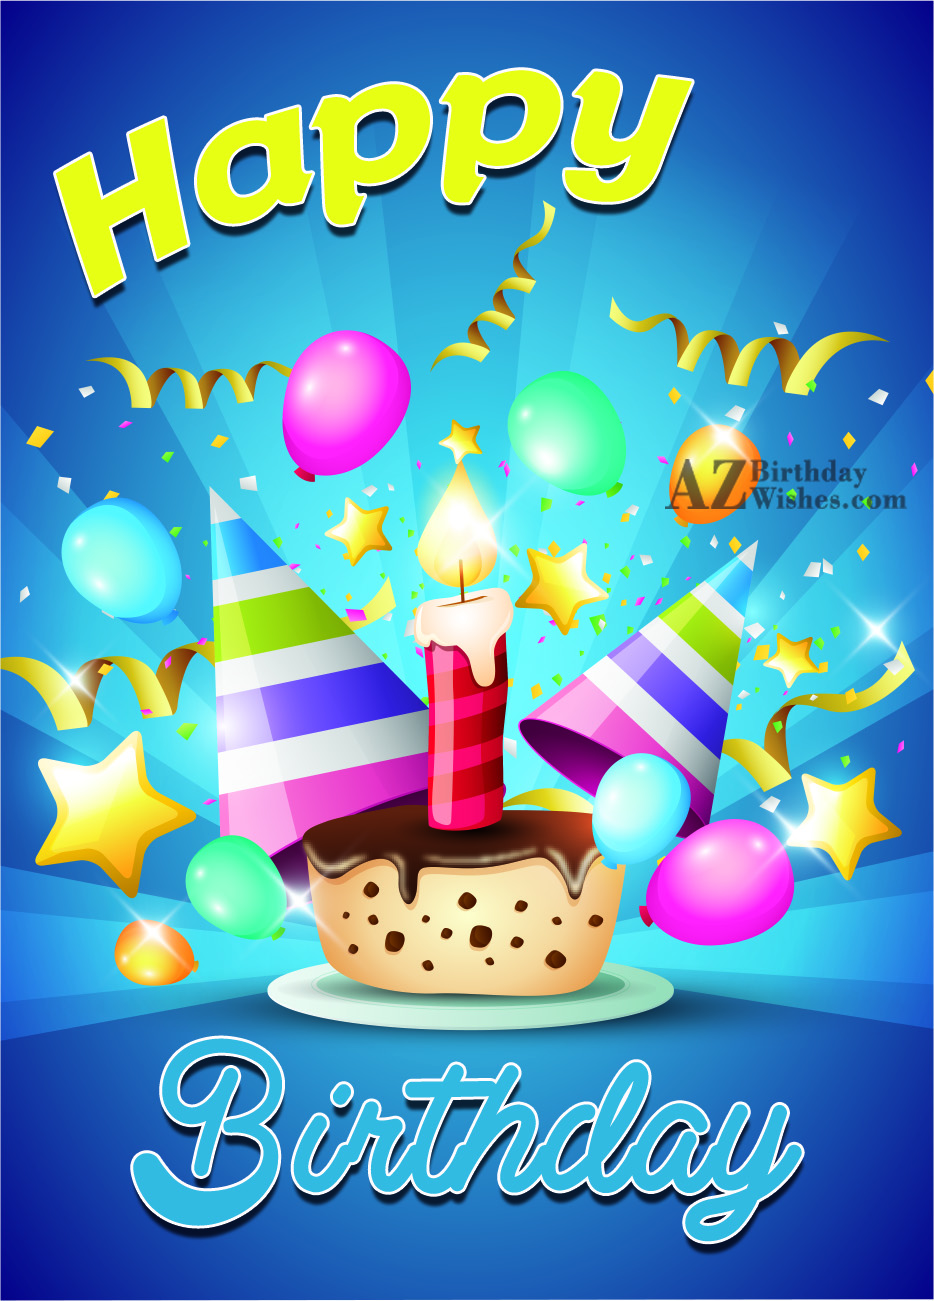 1st birthday wishes for baby boy in marathi